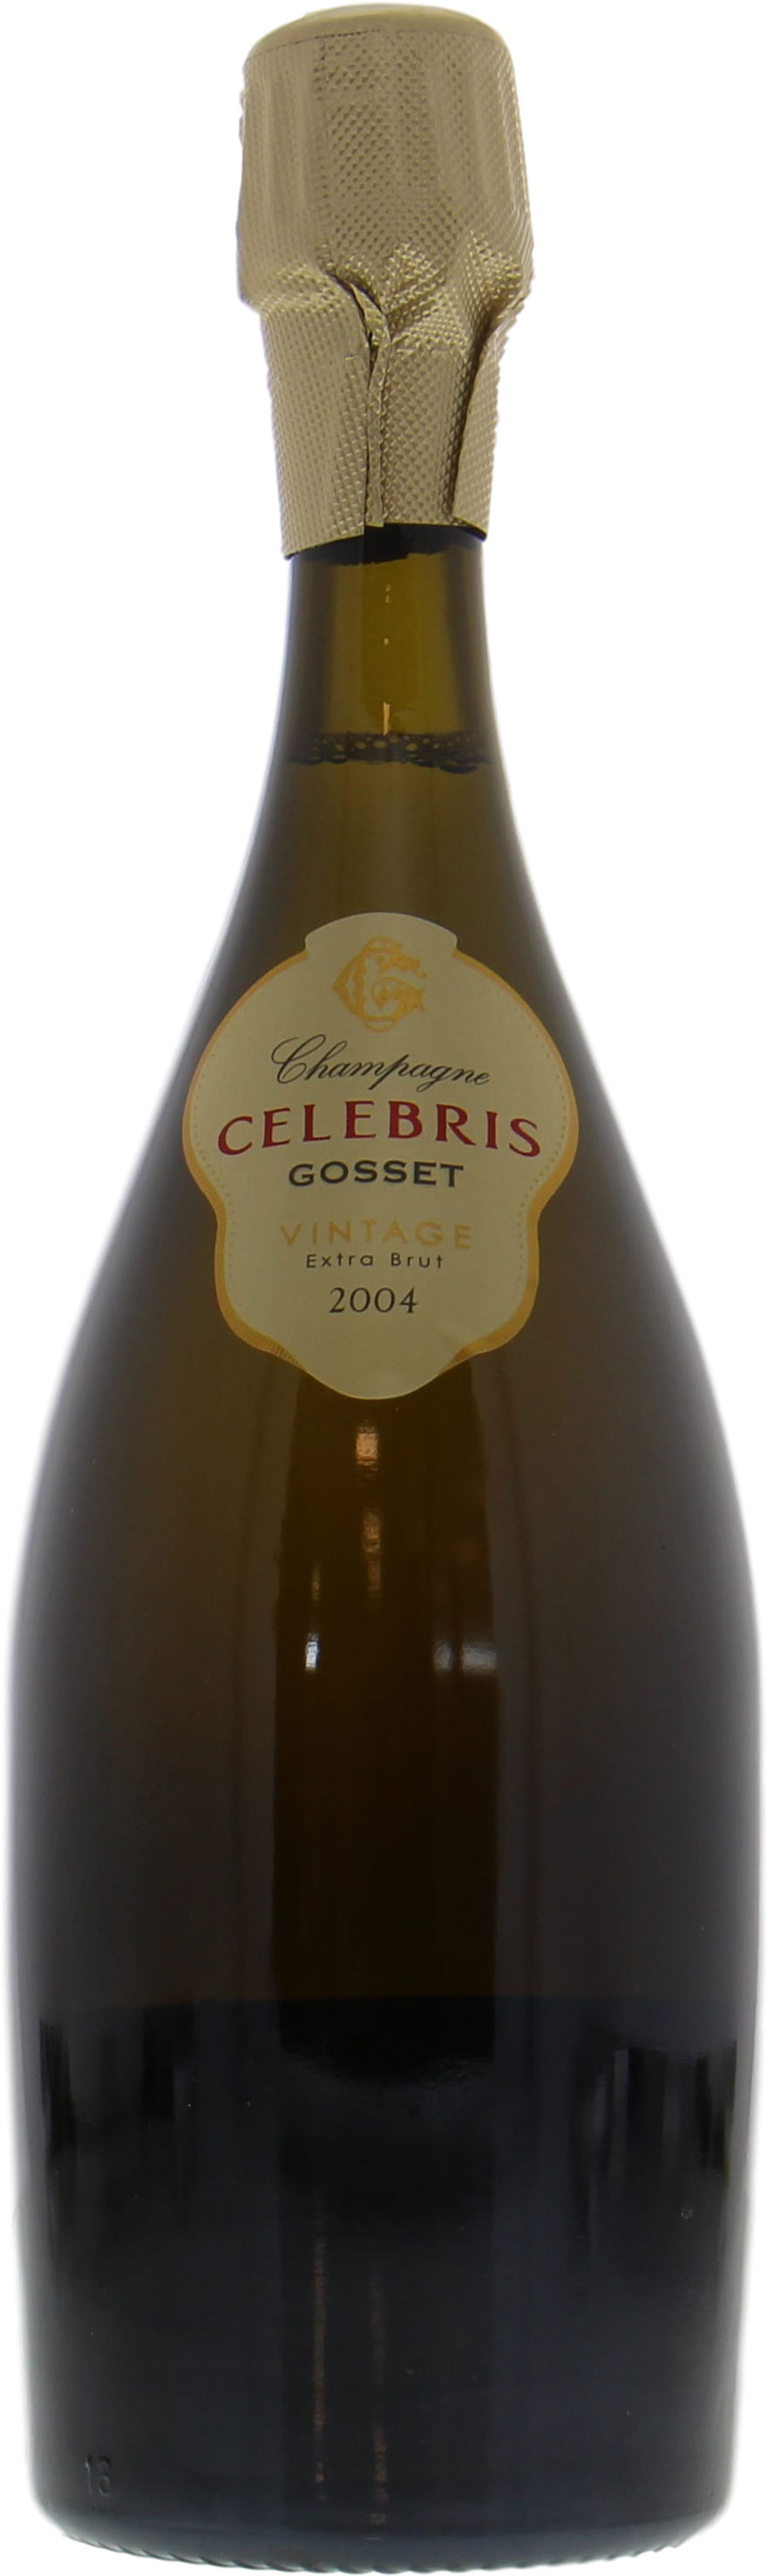 Gosset - Celebris Extra Brut Vinatge 2004 Perfect